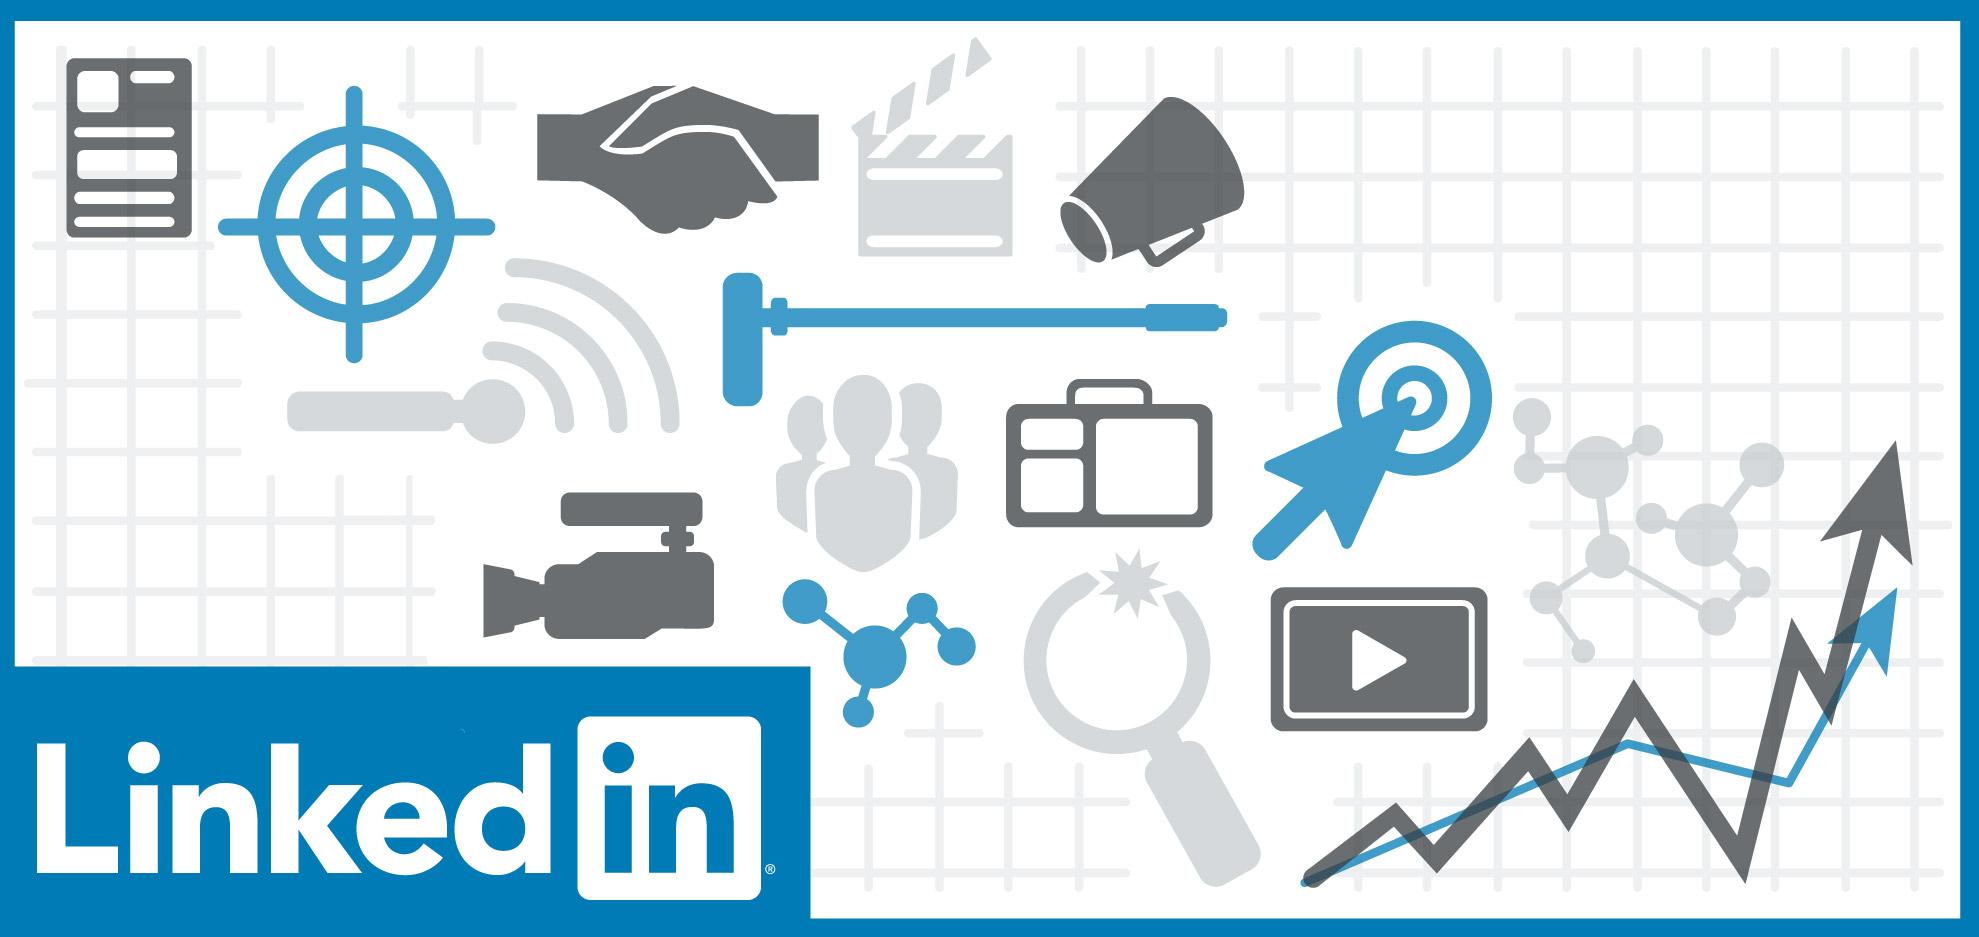 LinkedIn Hyperlink Logo - 9 Ways to Get LinkedIn Company Page Followers